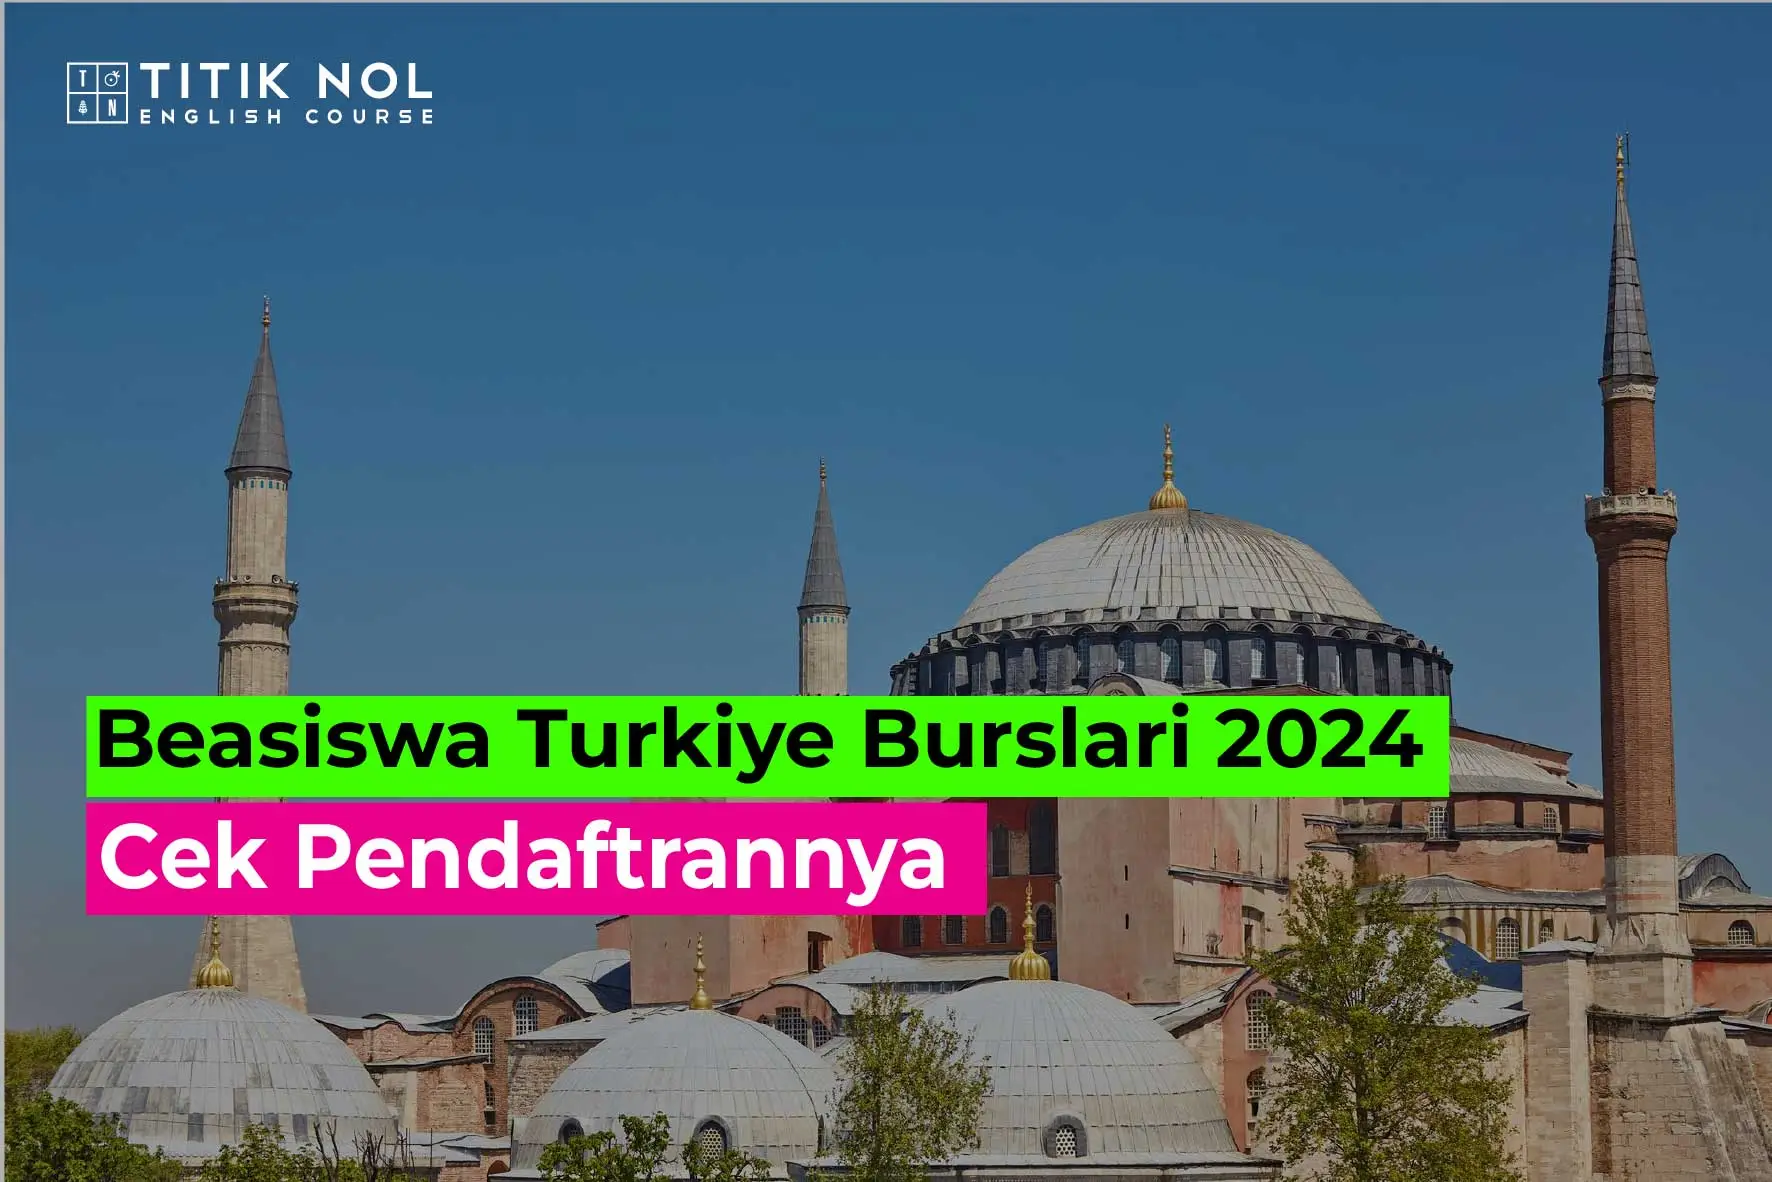 Beasiswa Turkiye Burslari